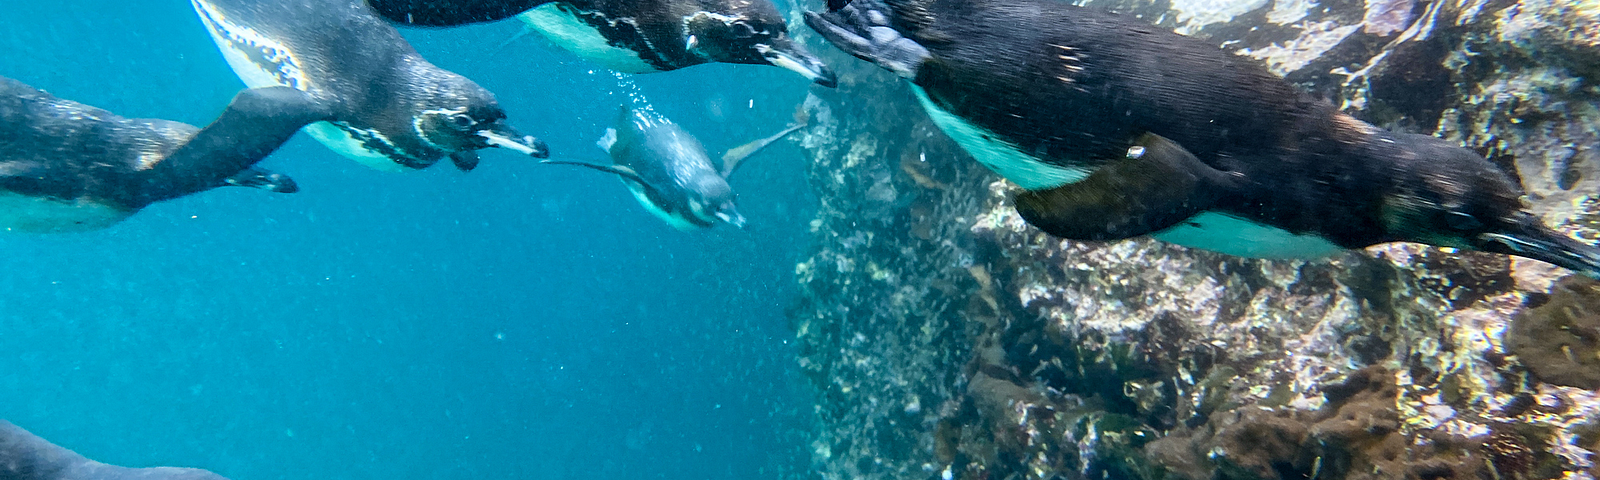 Galapagos penguins swimming underwater.